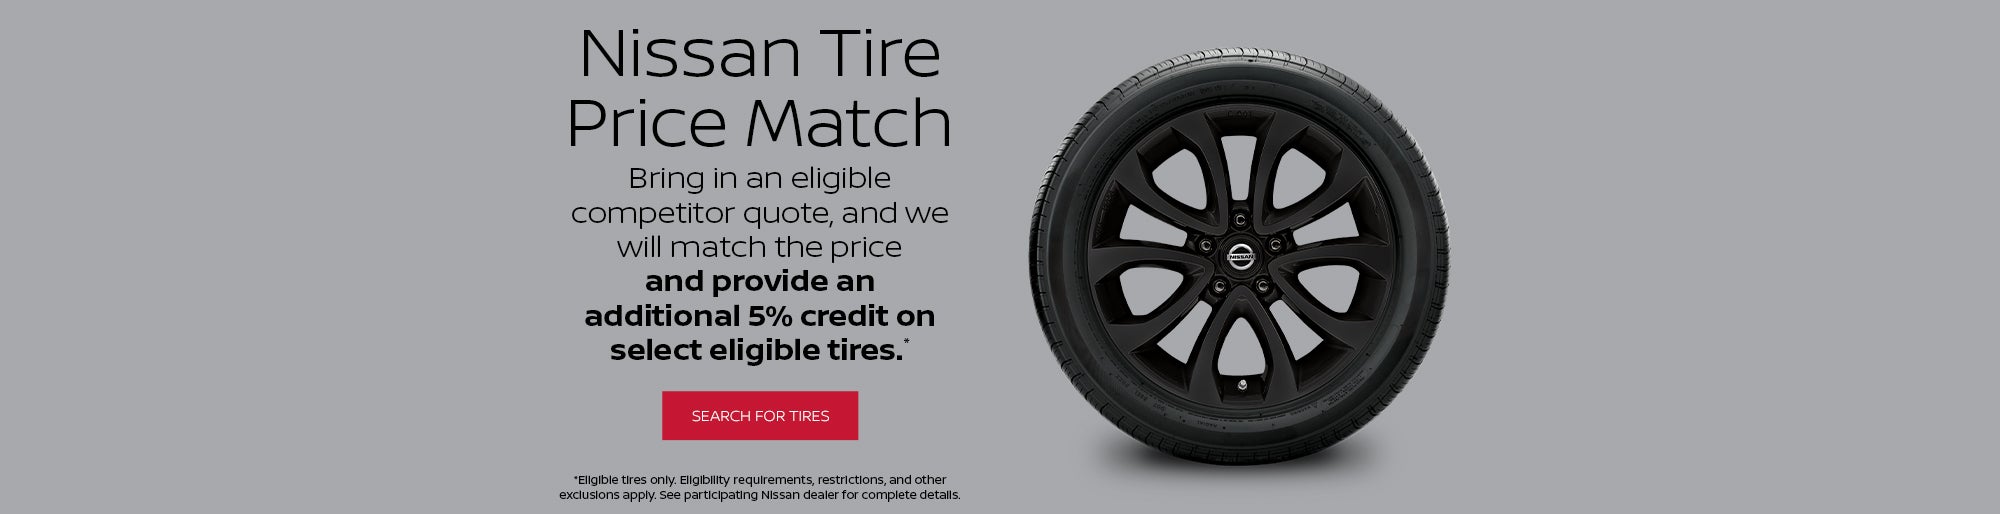 Nissan Tire Price Match